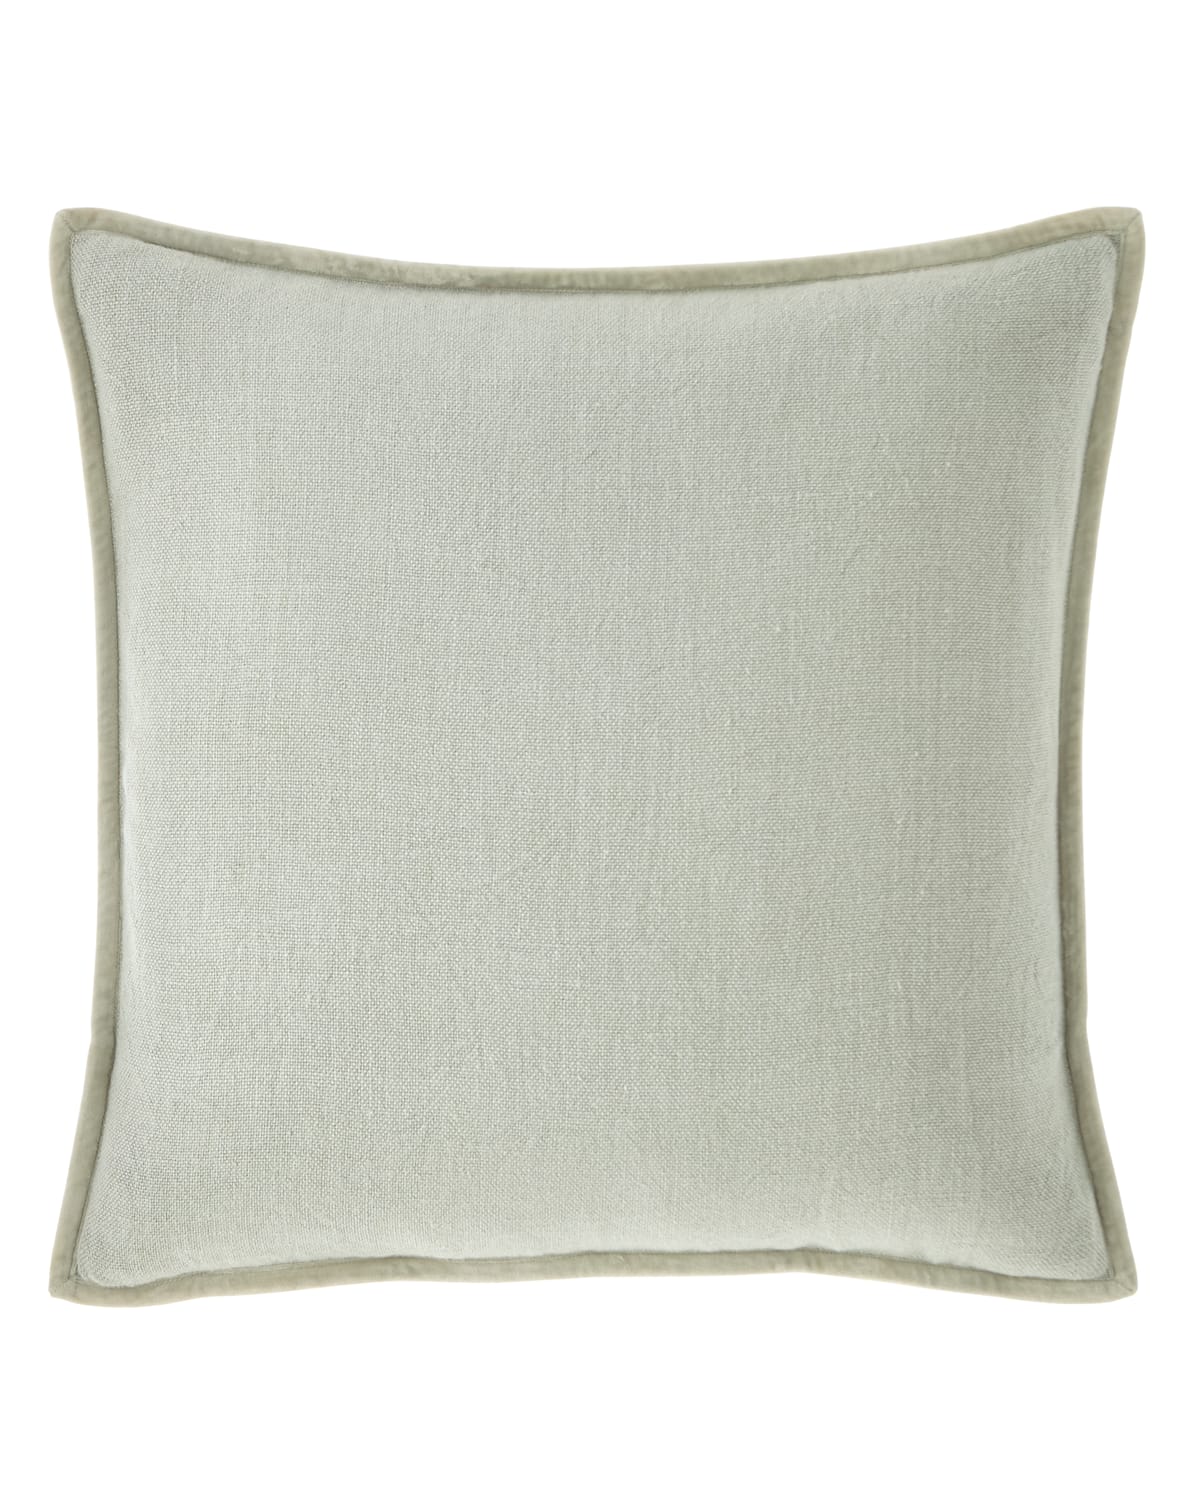 Image Ralph Lauren Home Sonya Decorative Pillow, 20"Sq.